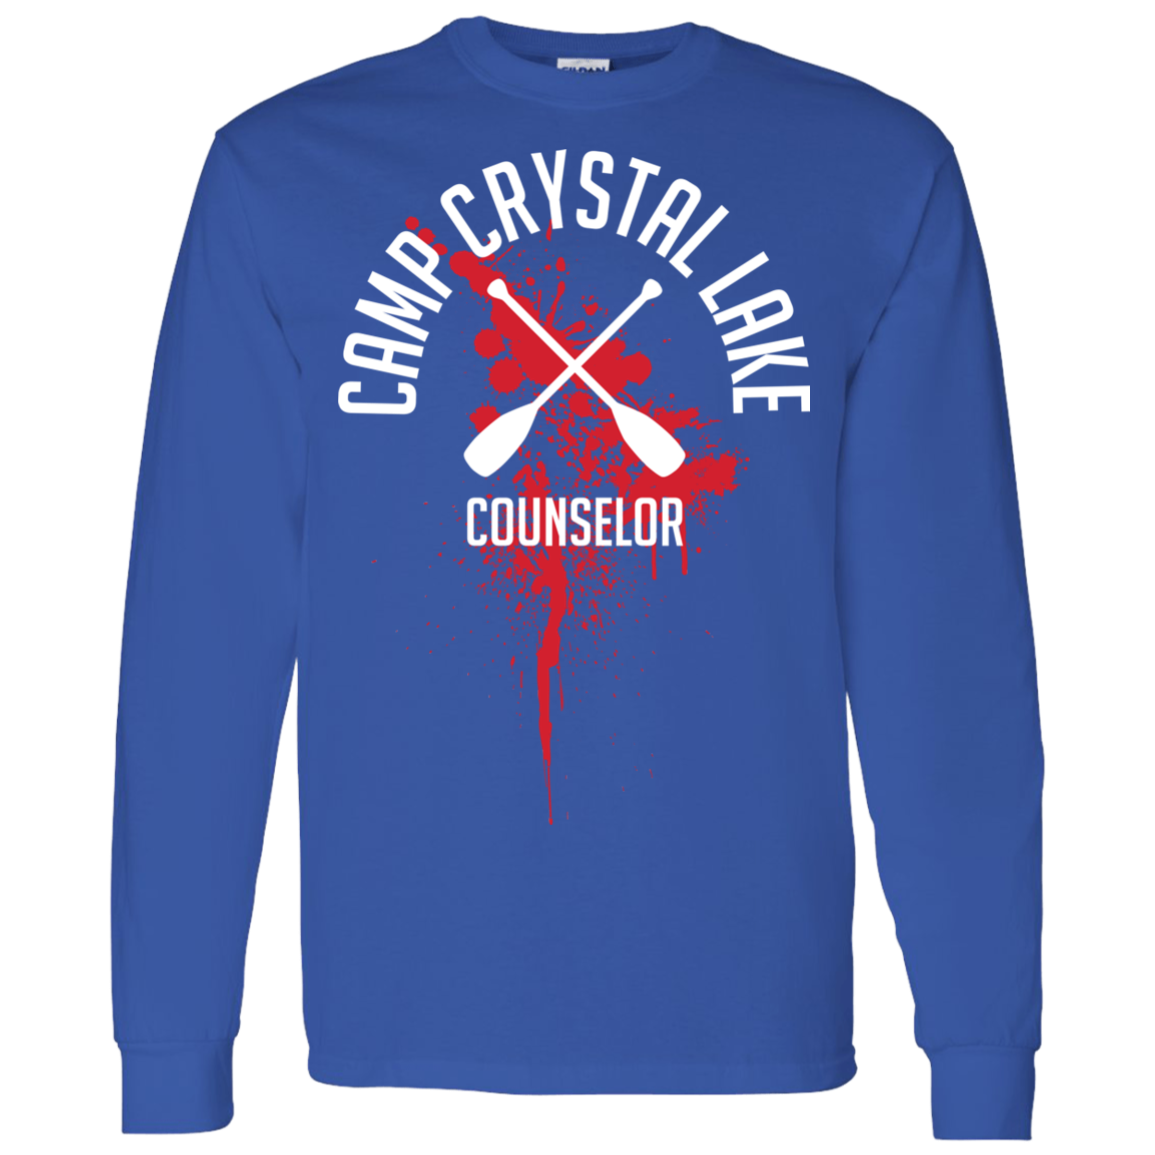 Camp Crystal Lake Counselor Shirt